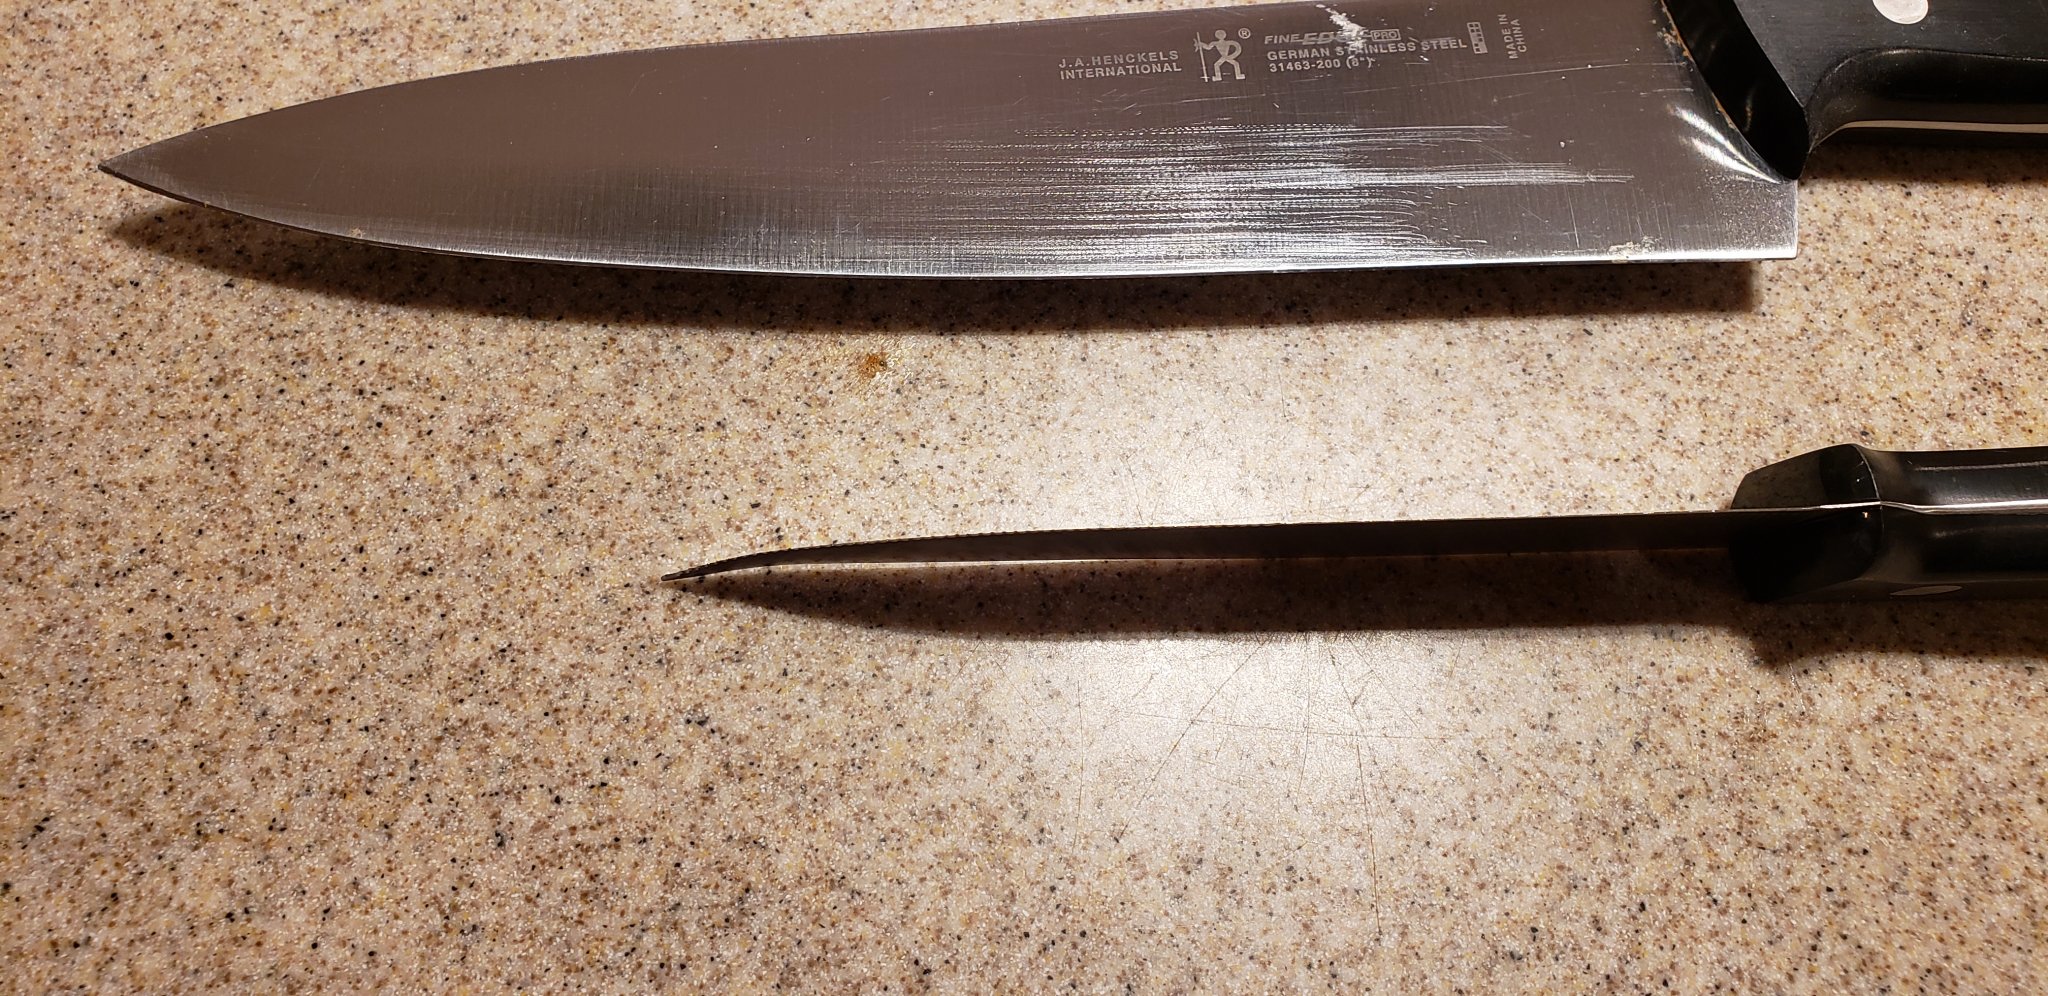 Rada Cutlery 5 Piece Carbon Steel Assorted Knife Set